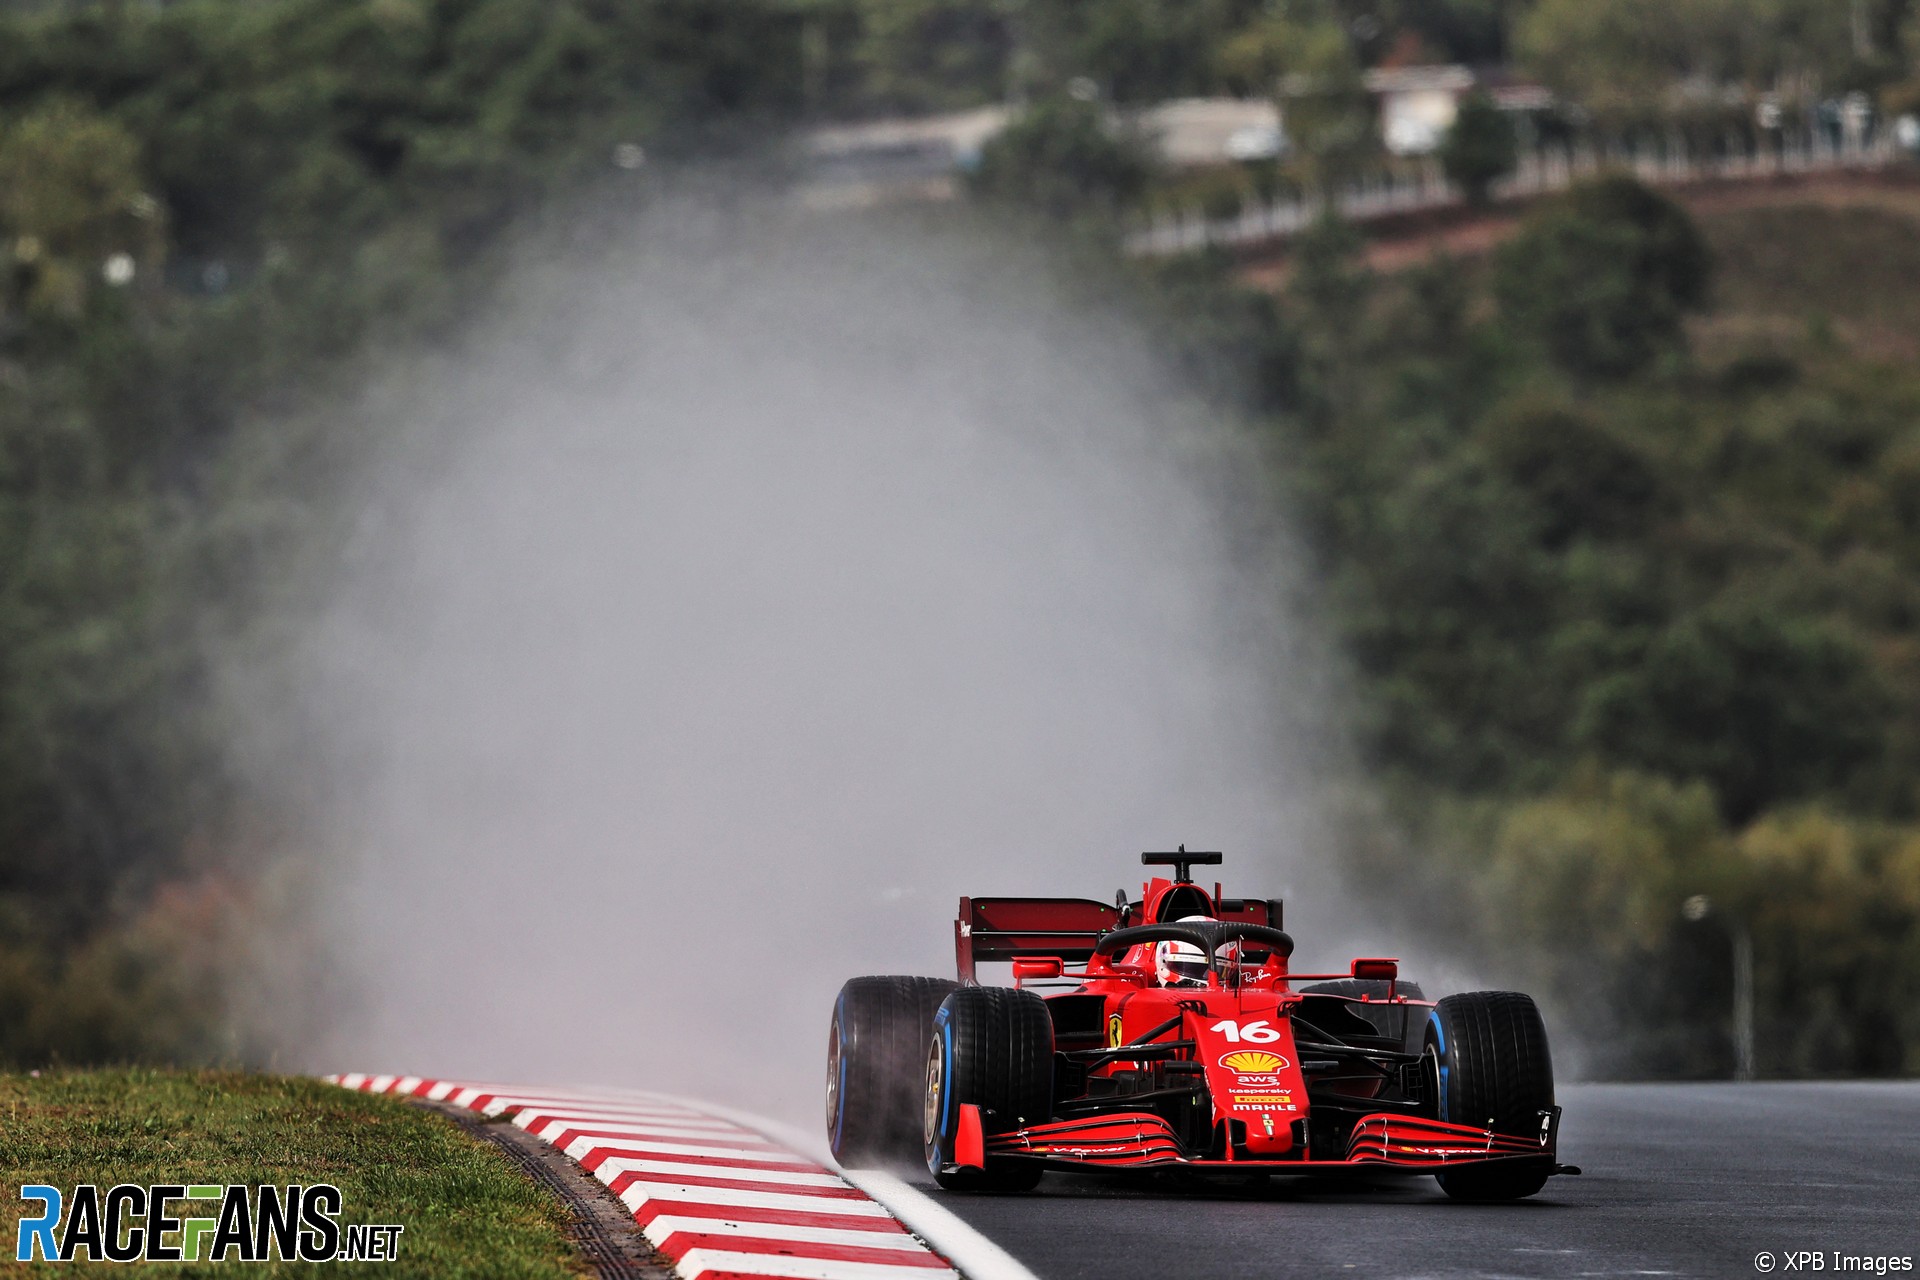 Charles Leclerc, Ferrari, Istanbul Park, 2021